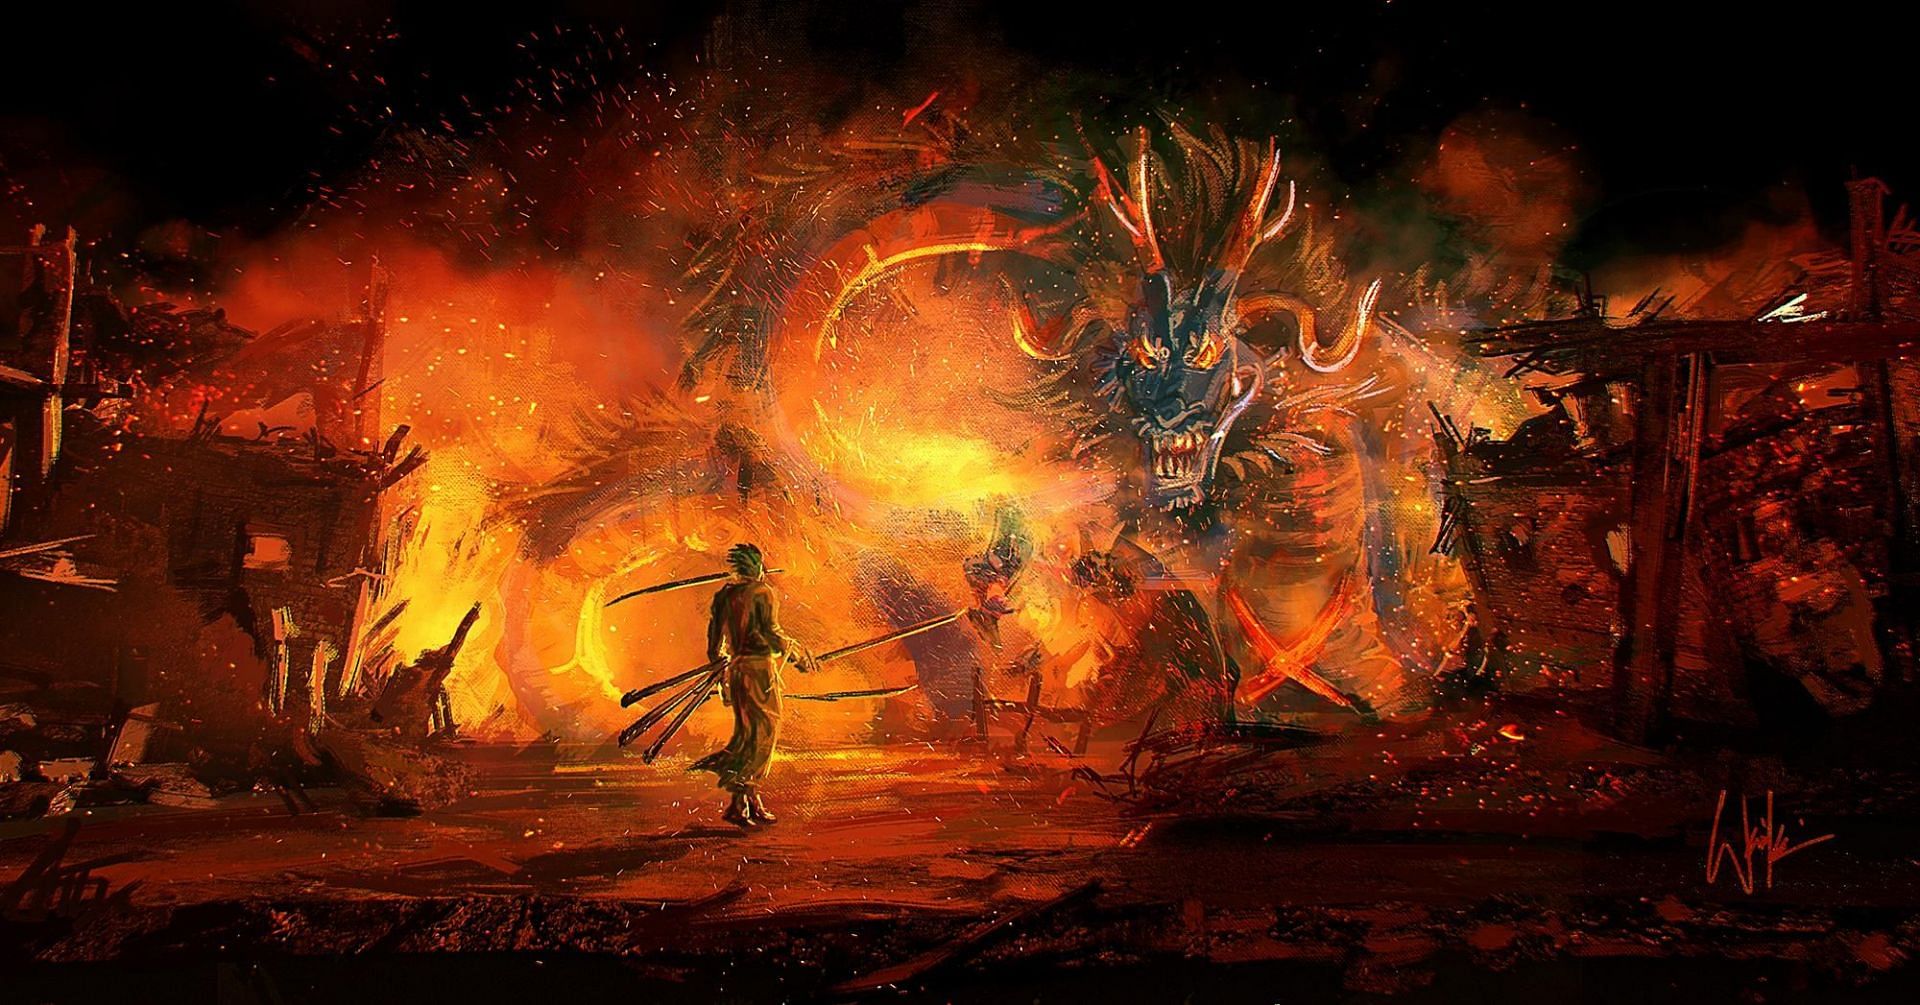 Zoro vs. Kaidou fanmade painting (Image via Reddit/angelus182)